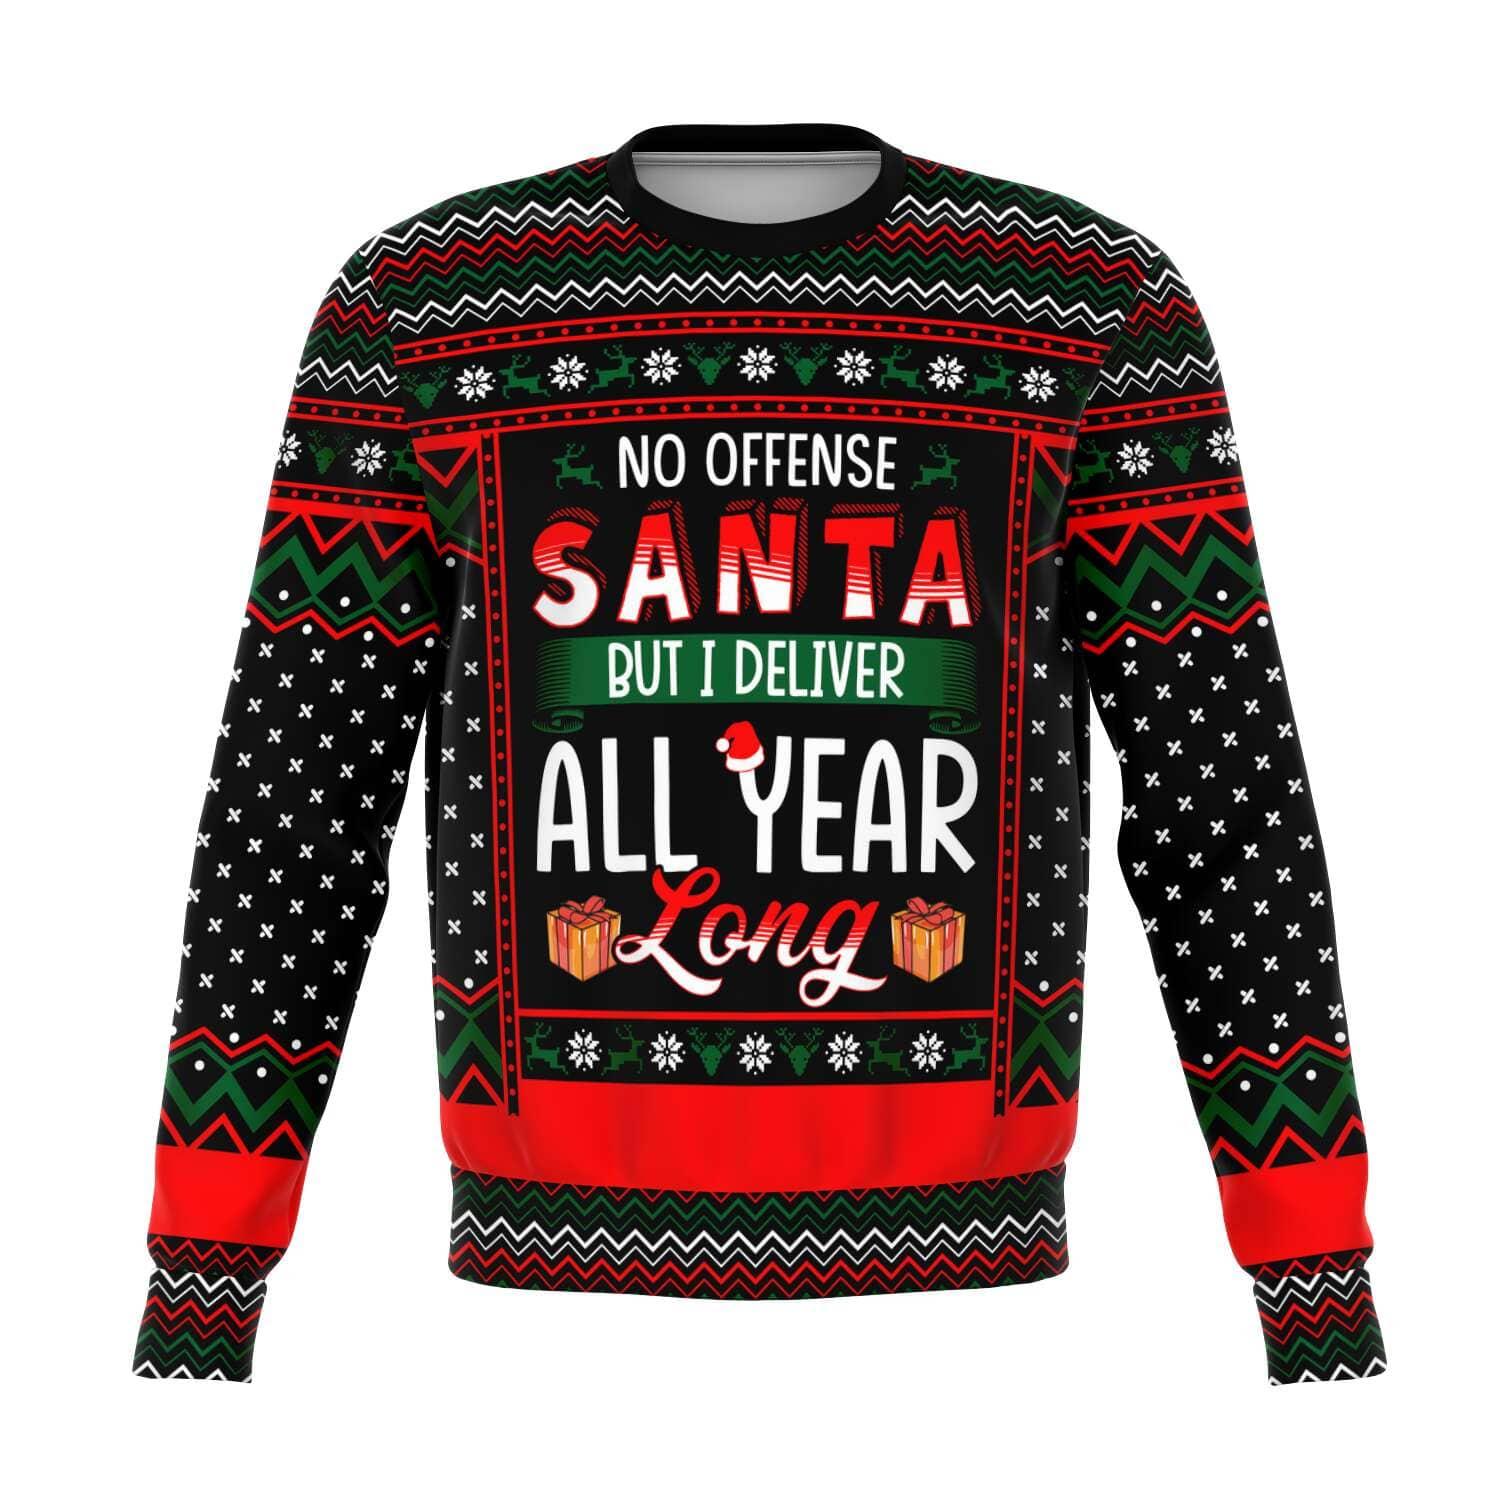 No offense Santa but I deliver all year long Christmas Sweatshirt